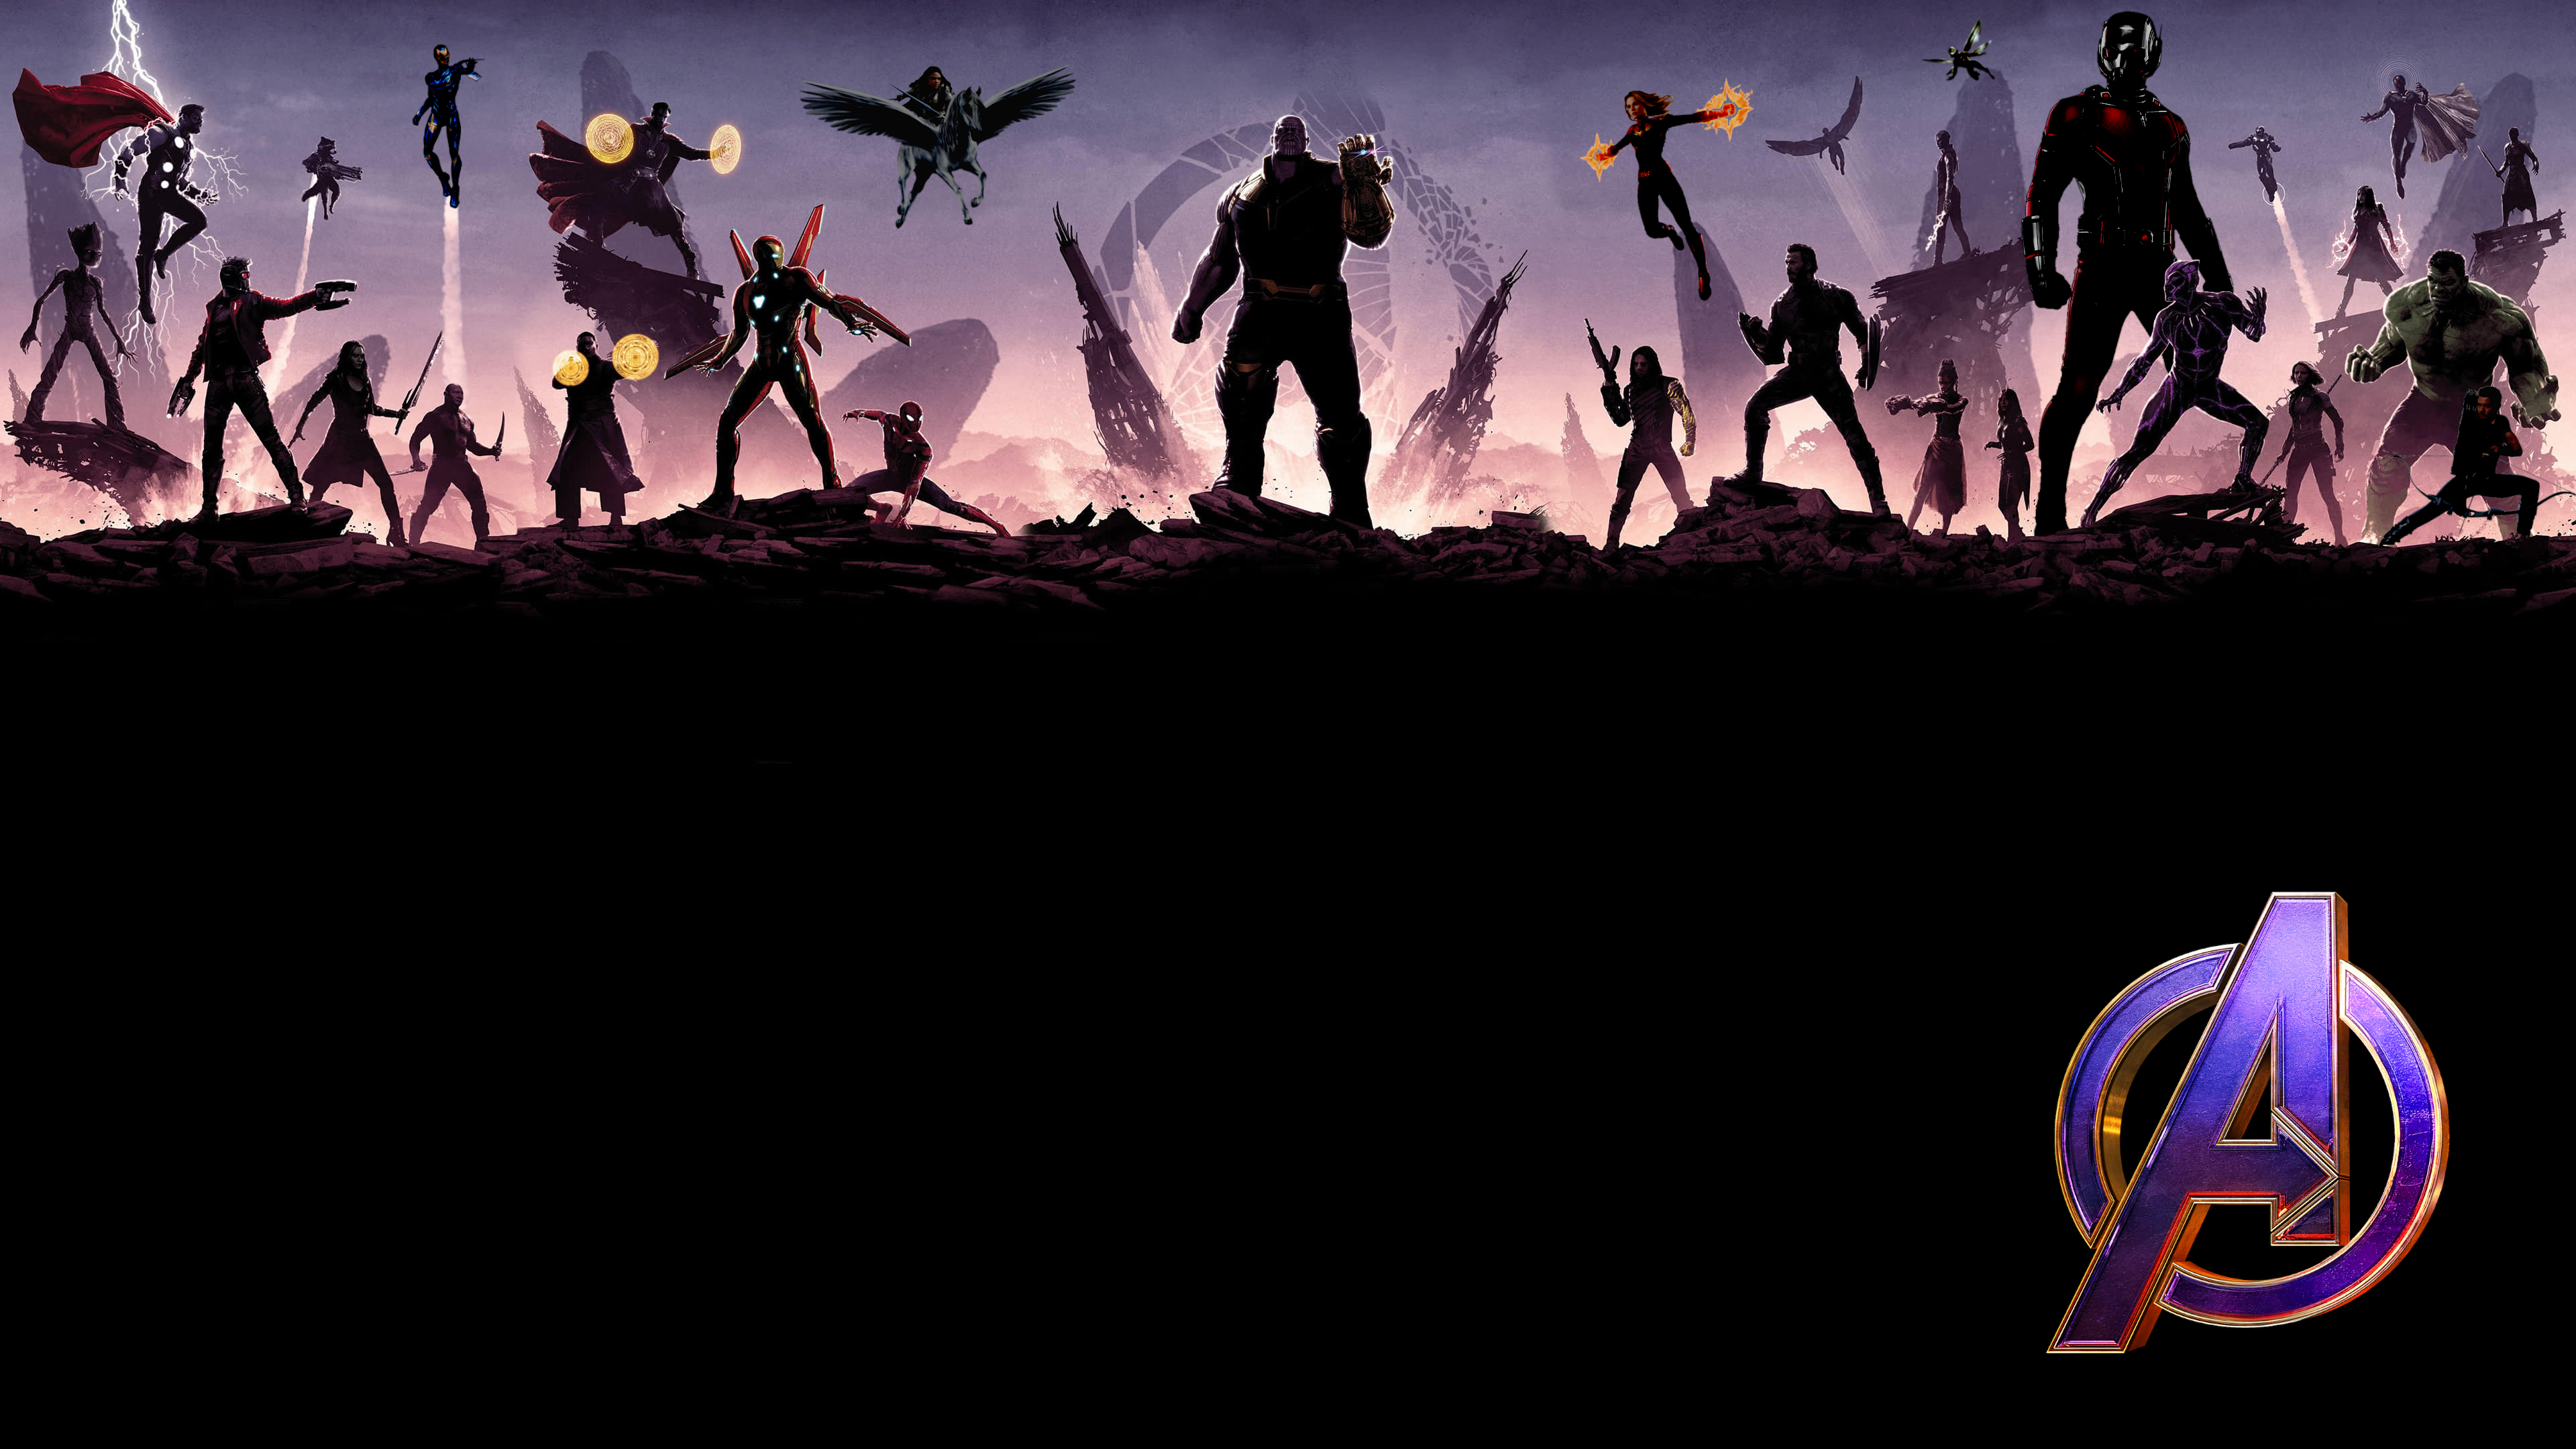 Avengers Endgame Avengers Infinity War Groot Thor Star Lord Rocket Raccoon Gamora Drax The Destroyer 3840x2160